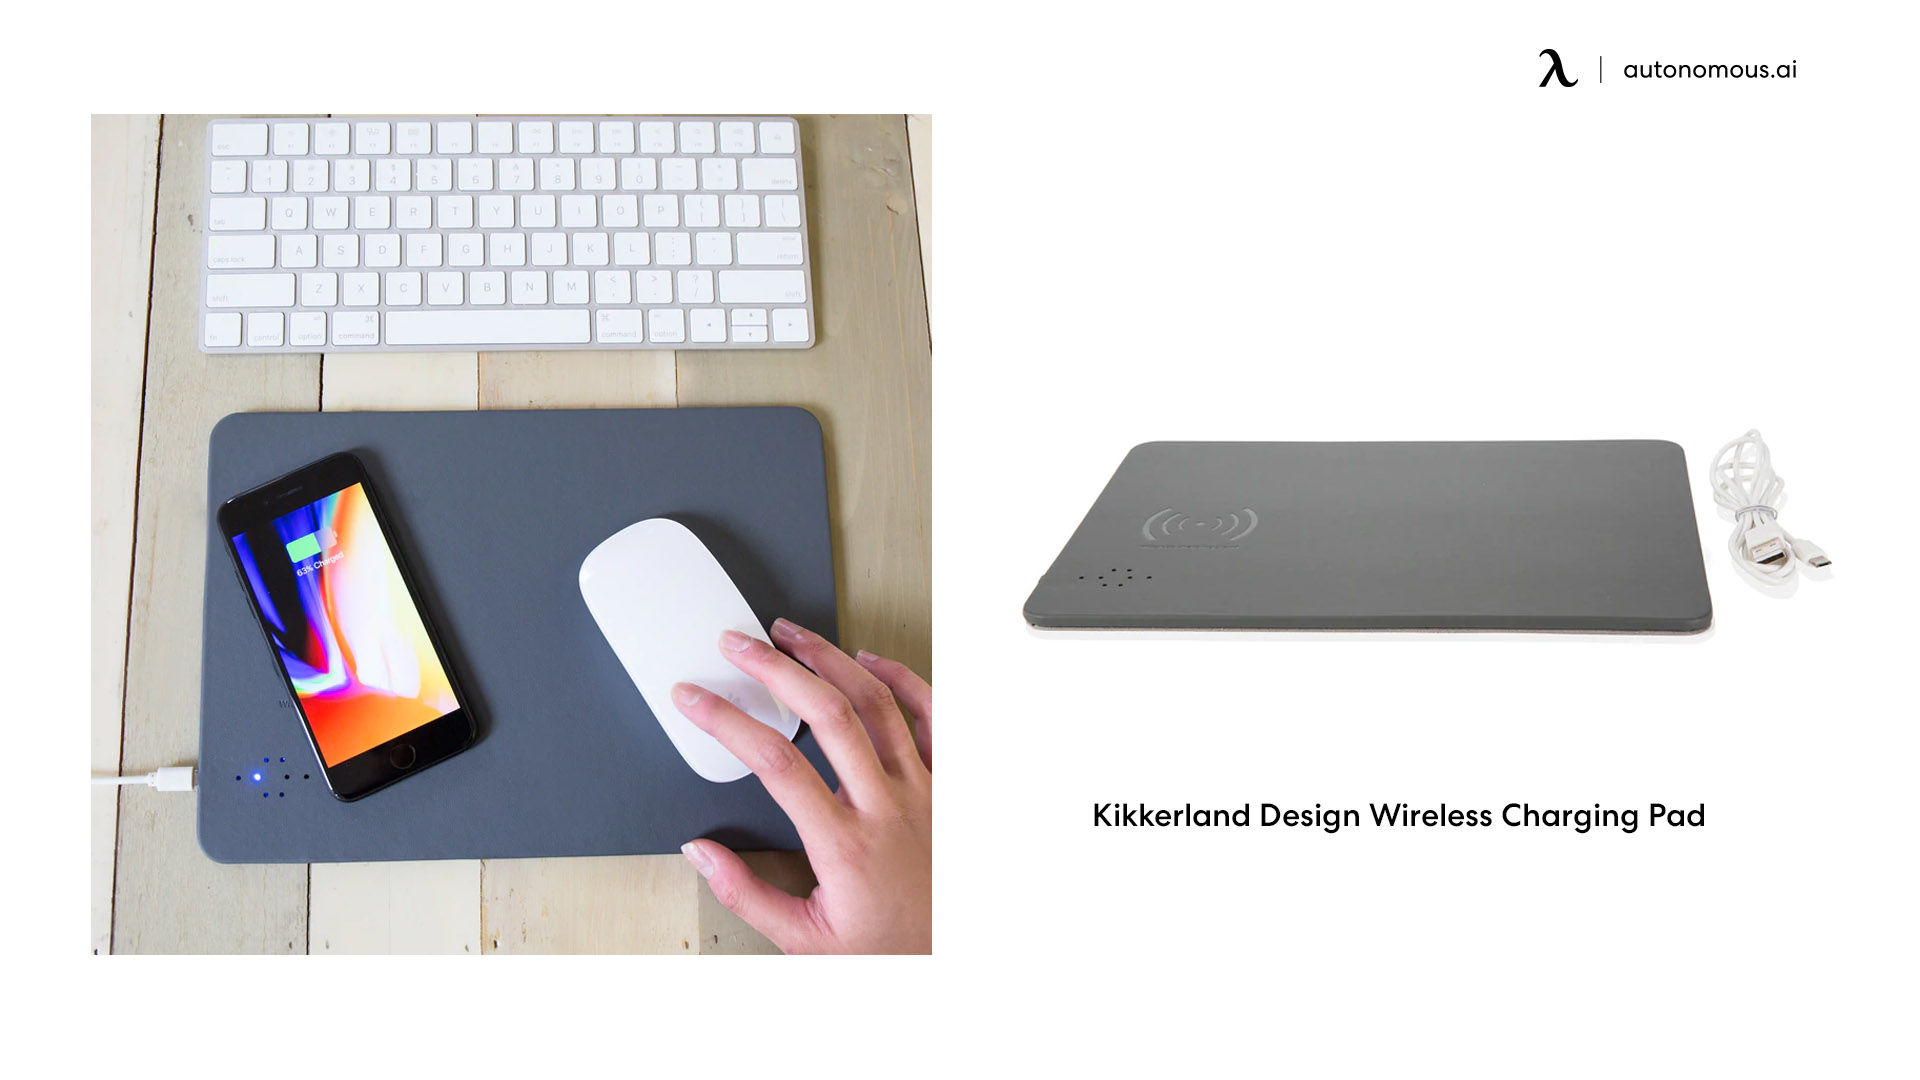 Kikkerland Design Wireless Charging Pad